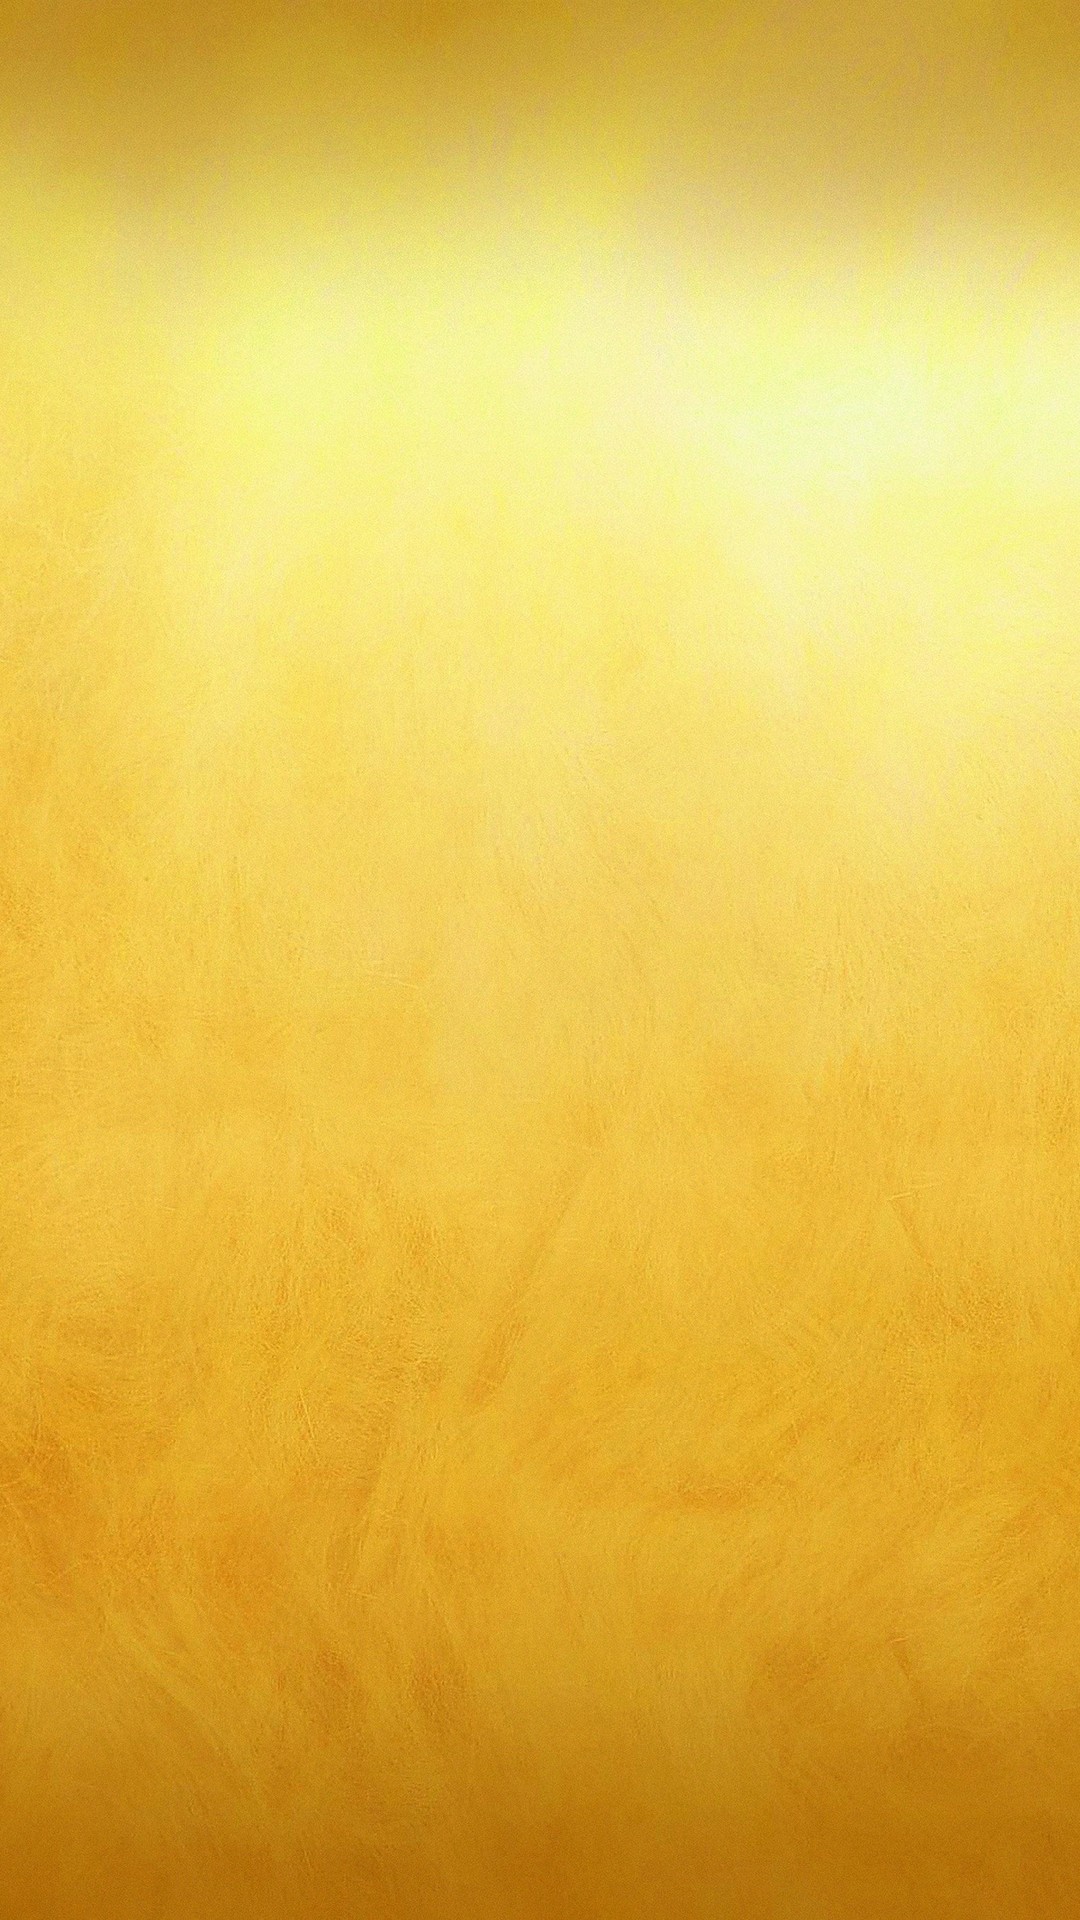 iPhone X Wallpaper Plain Gold resolution 1080x1920